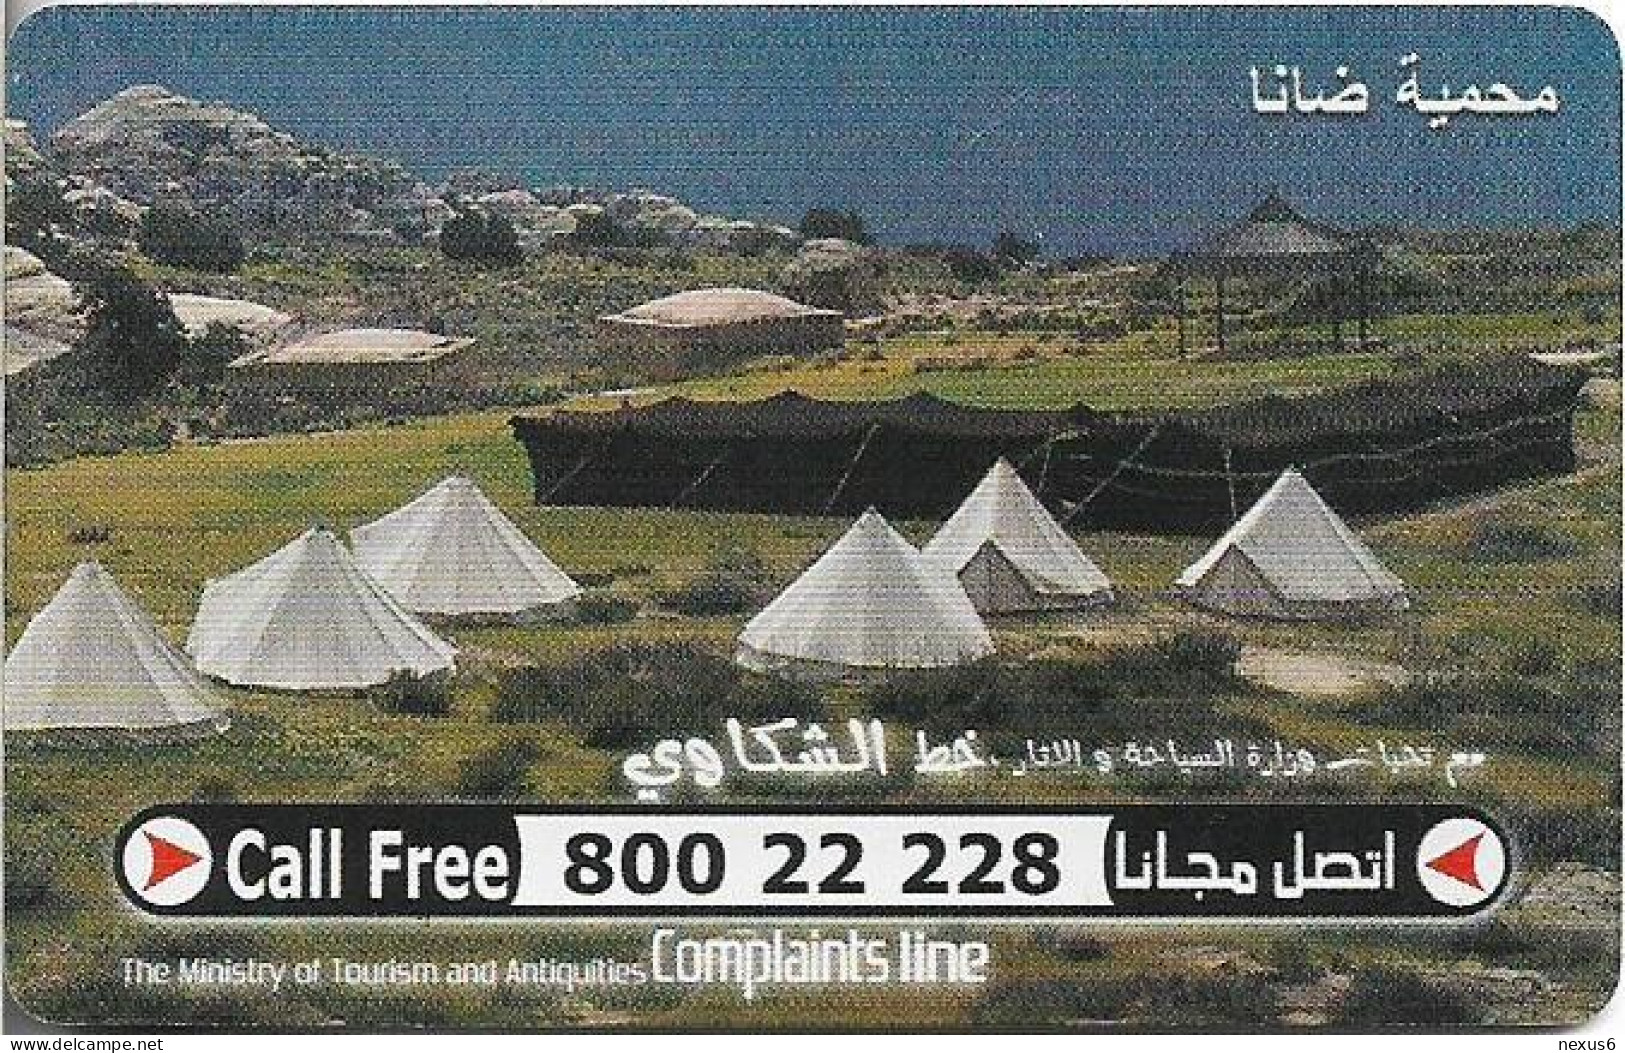 Jordan - Alo - Camp (CN.4101), 04.2002, 3JD, 10.000ex, Used - Giordania